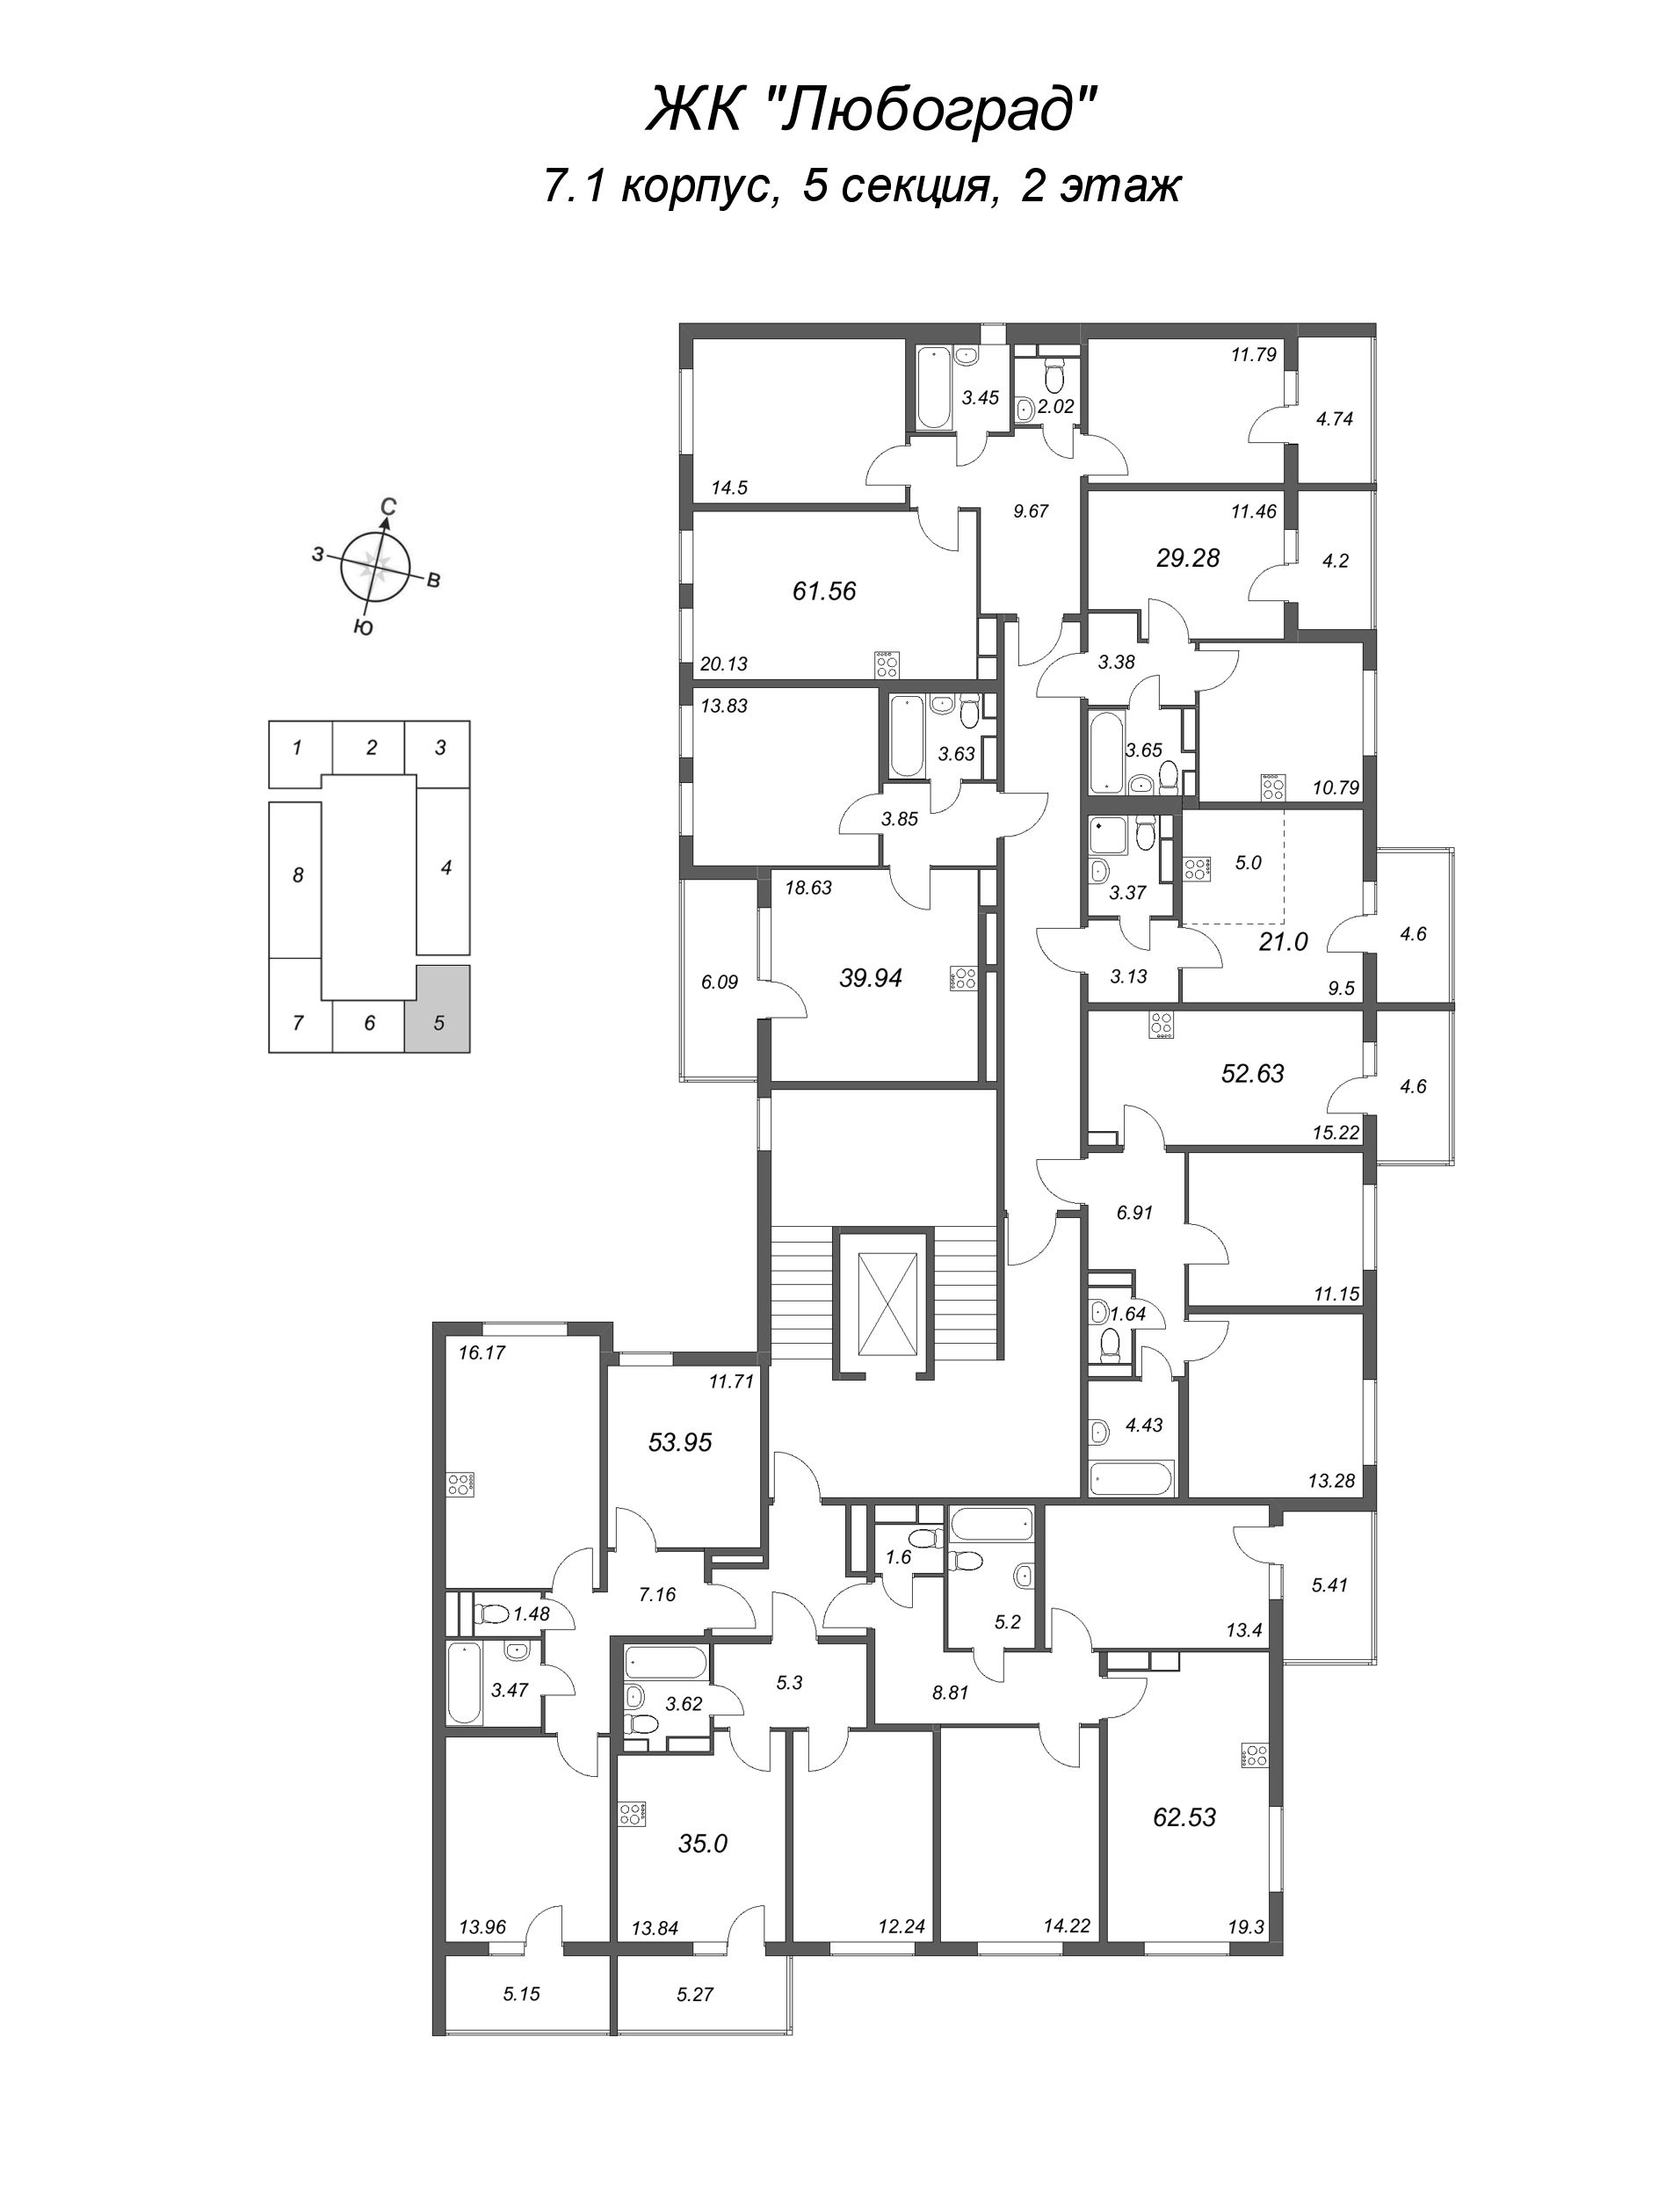 3-комнатная (Евро) квартира, 53.95 м² - планировка этажа